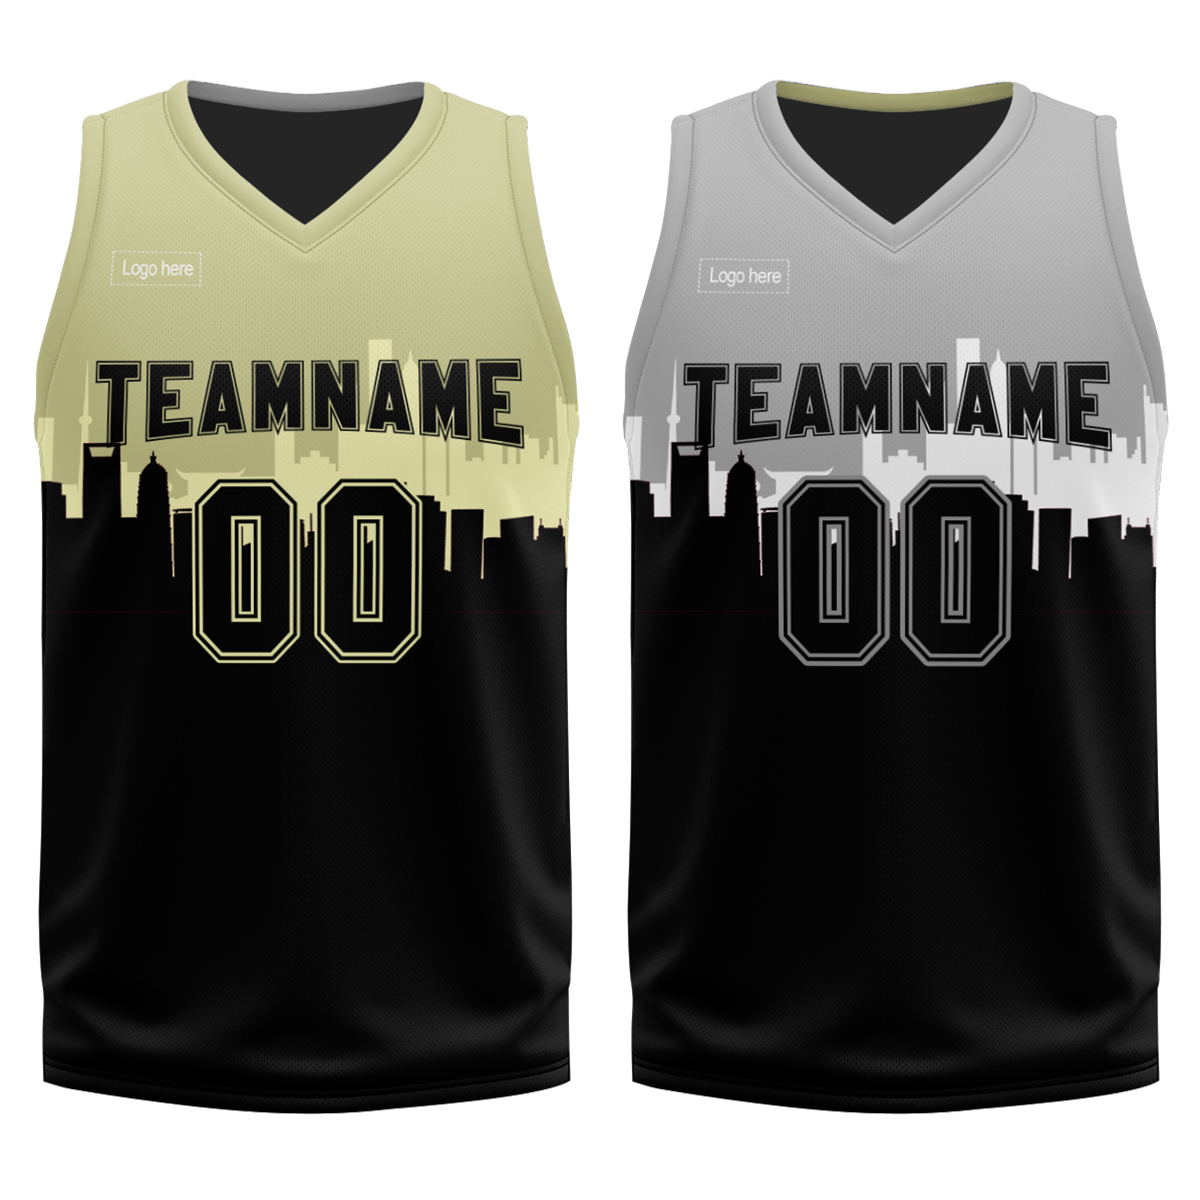 customized-sublimation-printing-basketball-uniforms-design-competitive-basketball-team-jerseys-at-cj-pod-4